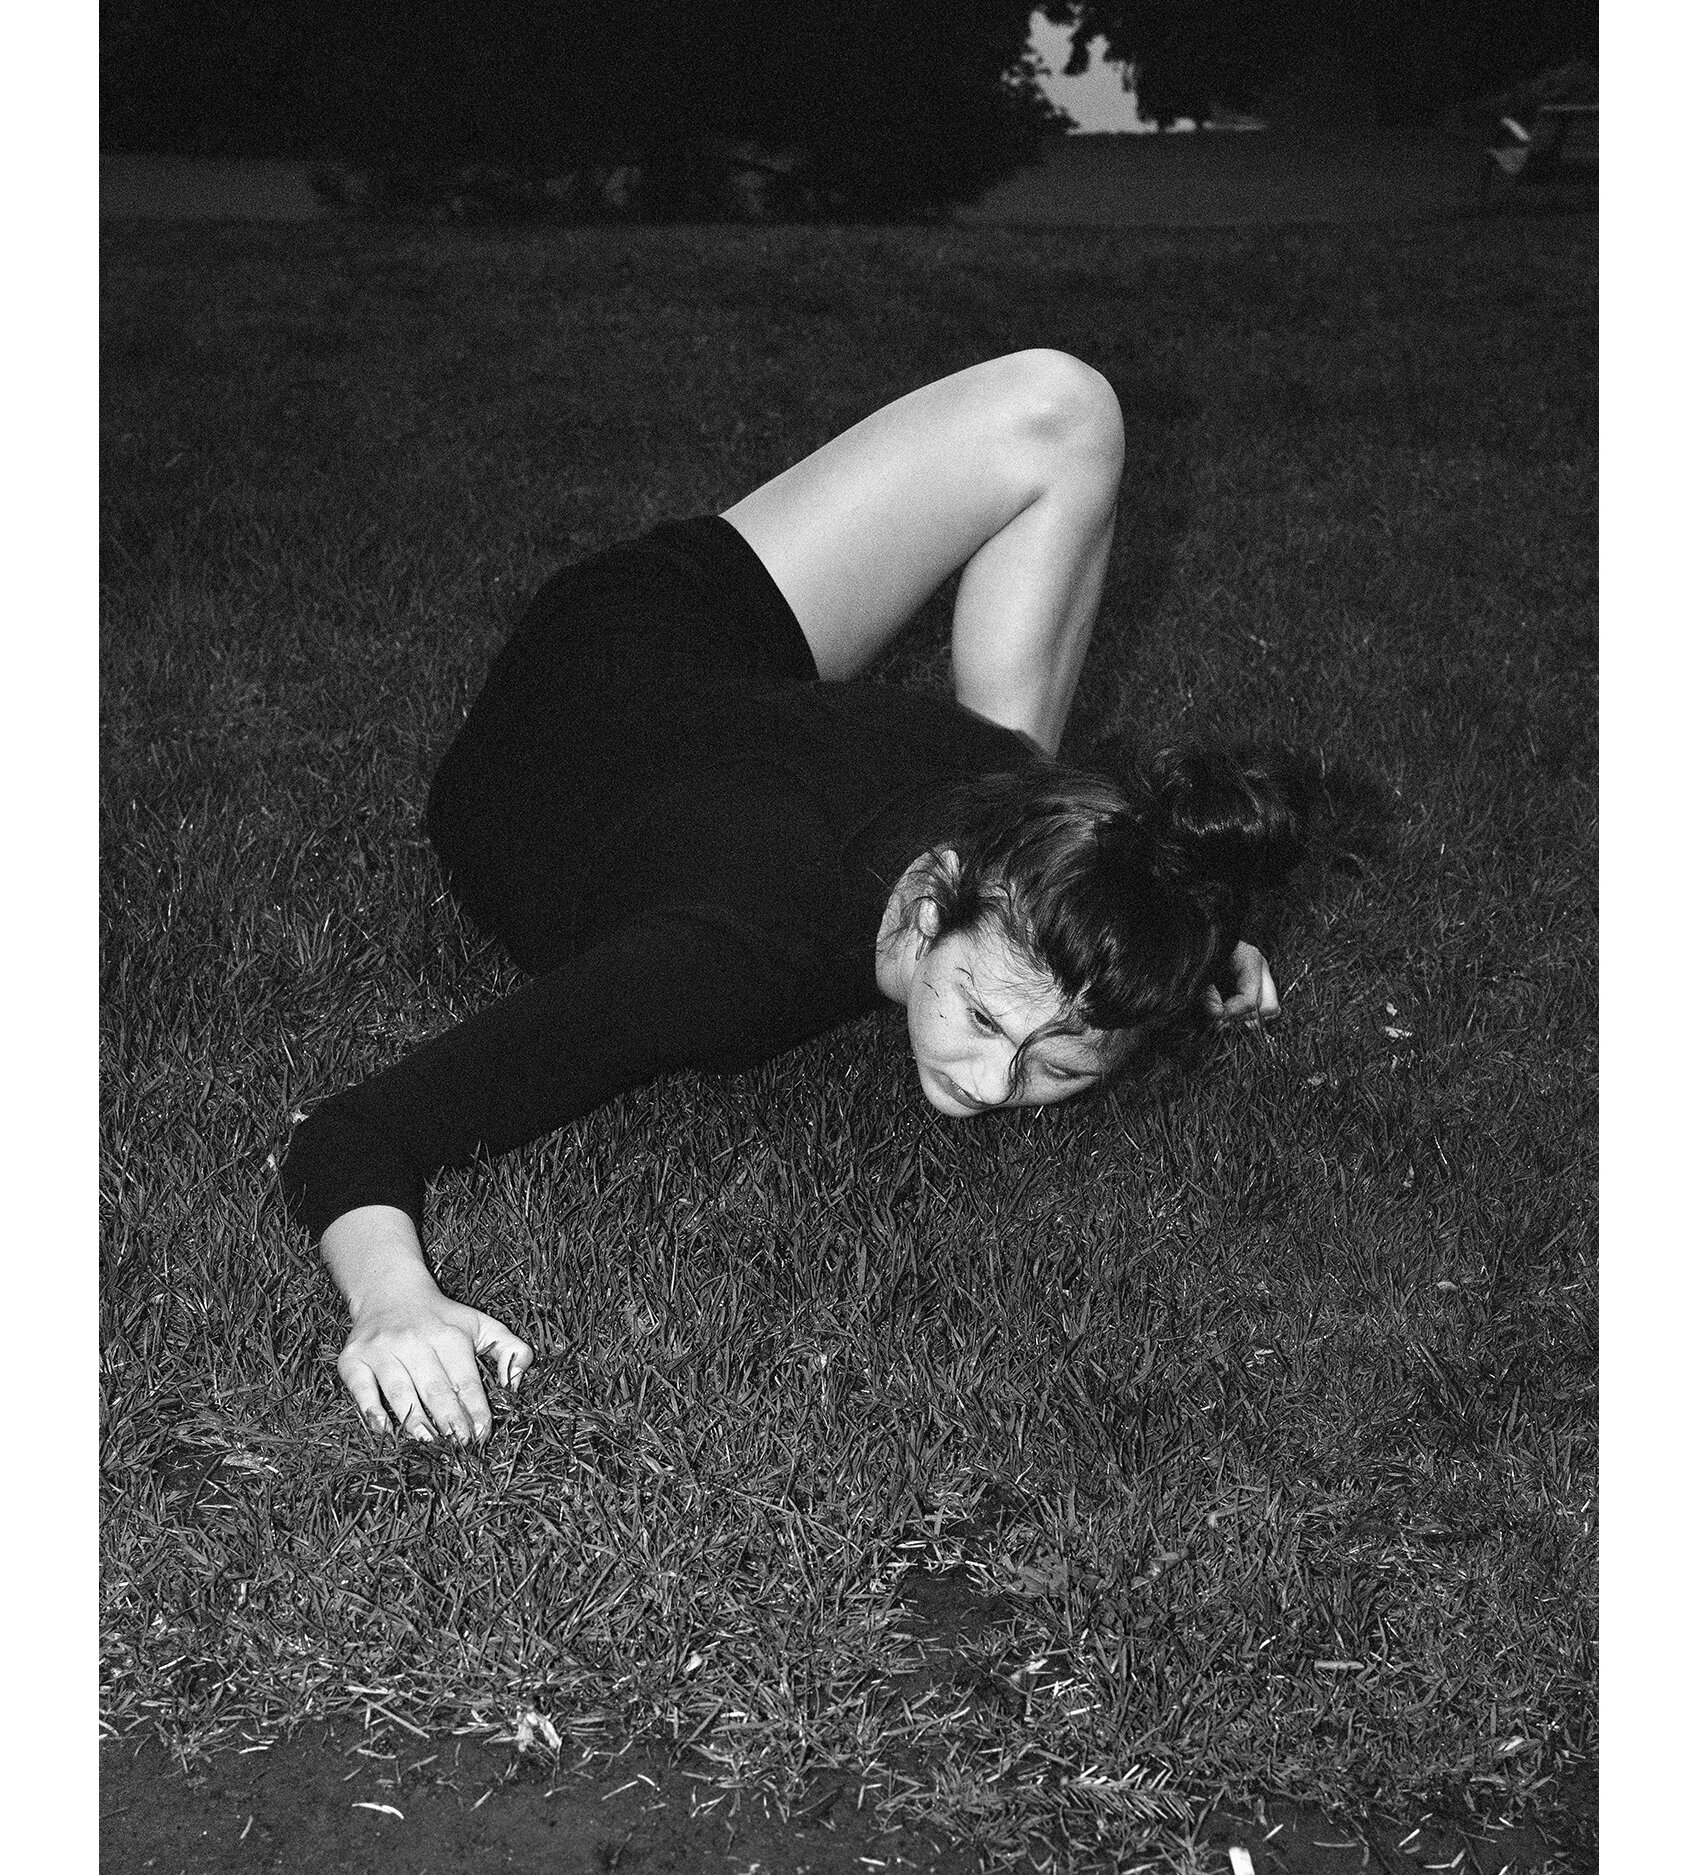 Luna Lopez svartvitt fotografi